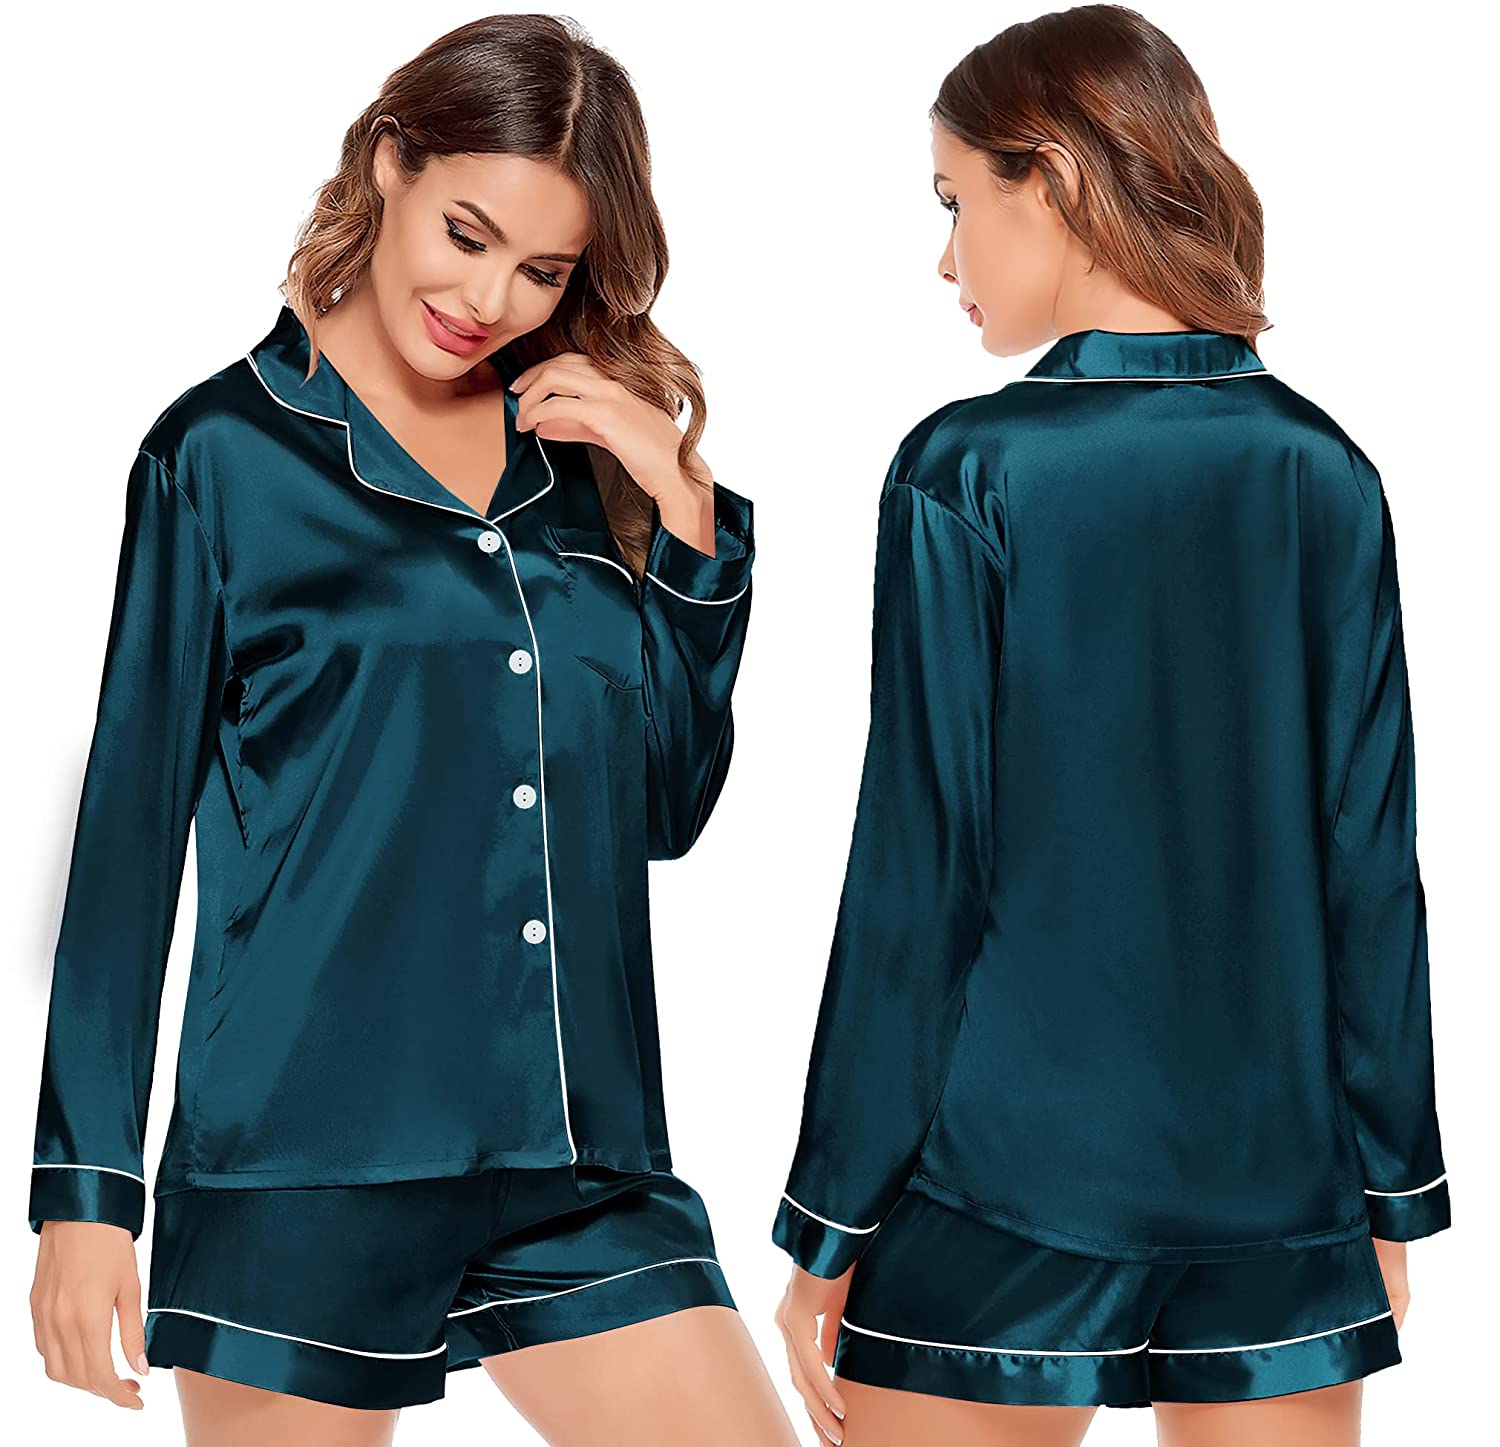 AherBiu 2 Piece Pajamas Sets for Women Satin Long Sleeve Shirts